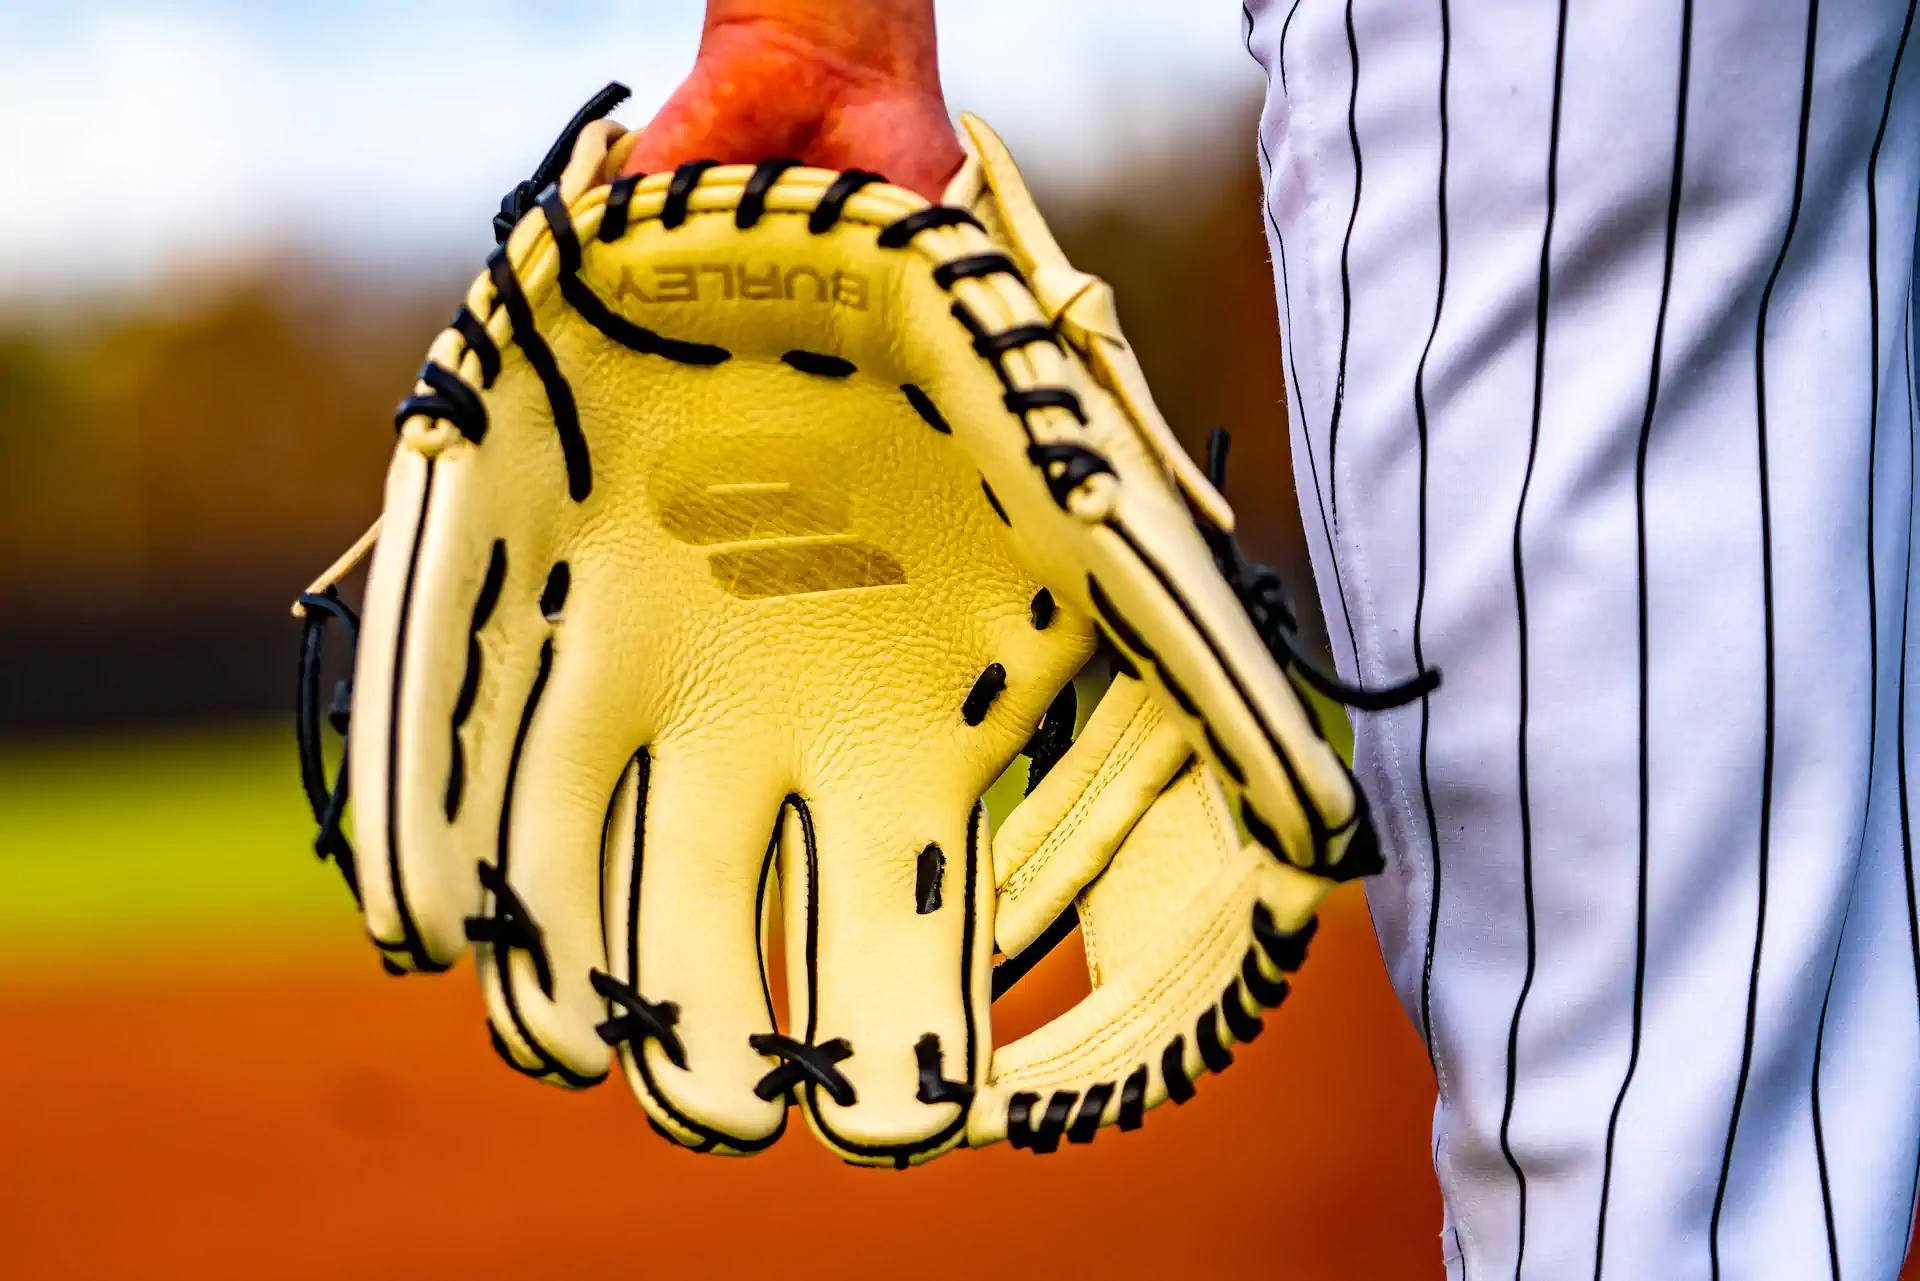 baseball glove break in and softball glove break in featured image for burley baseball